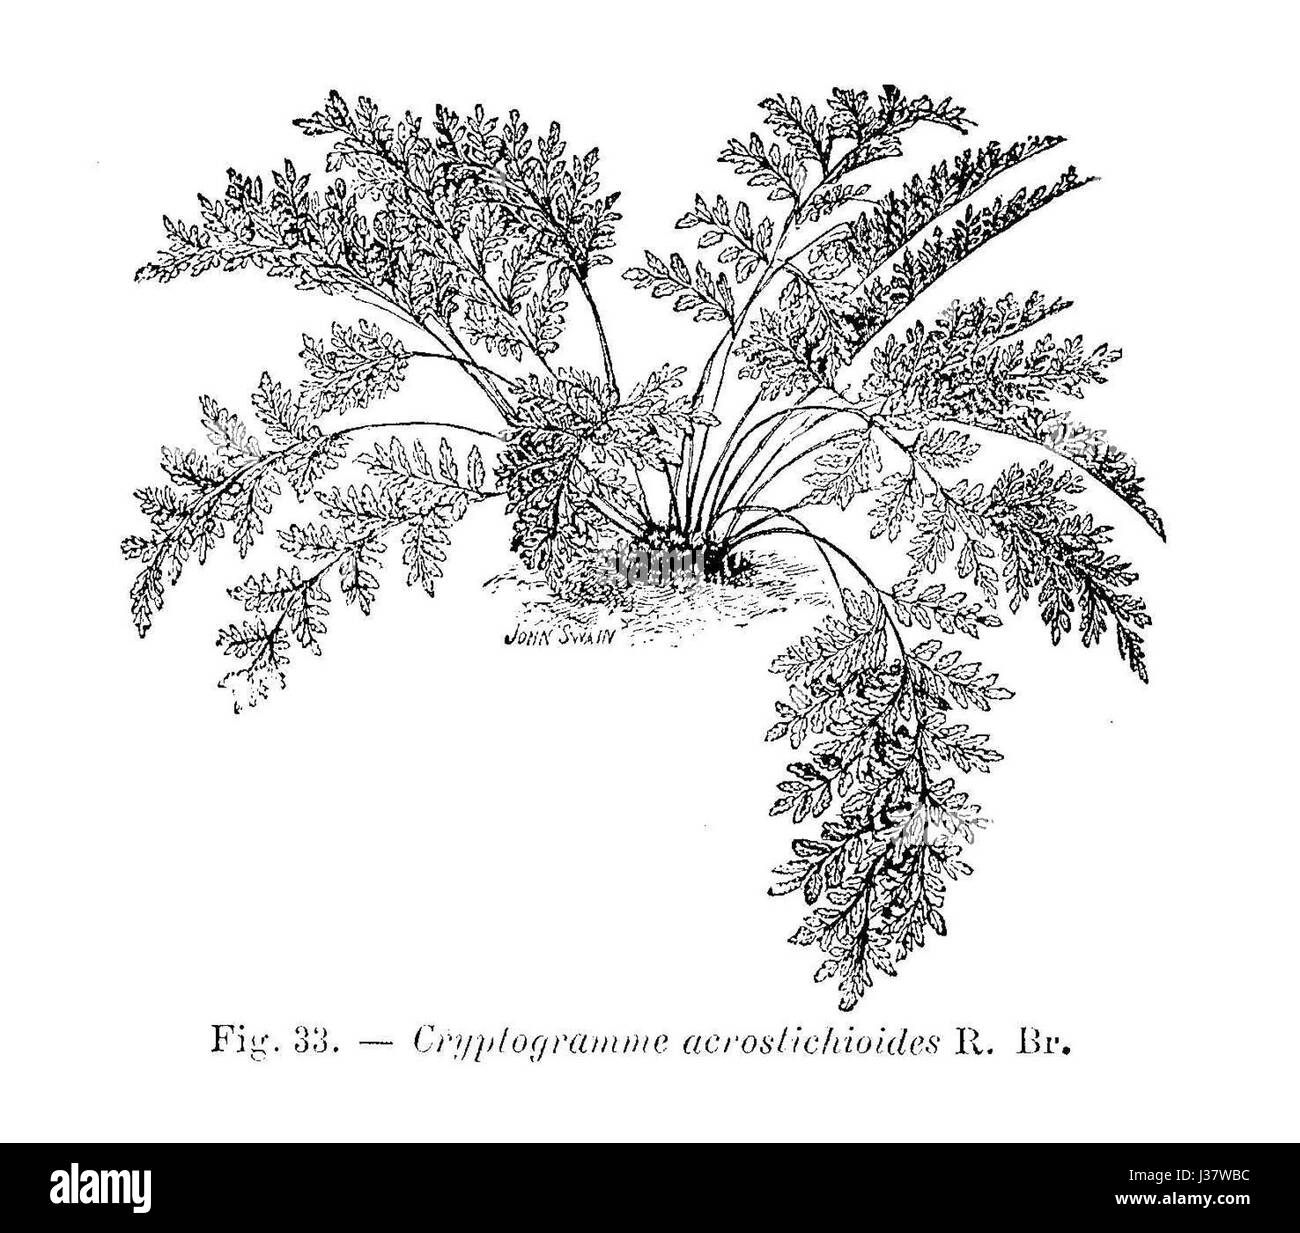 Cryptogramma acrostichoides (dessin) Stock Photo